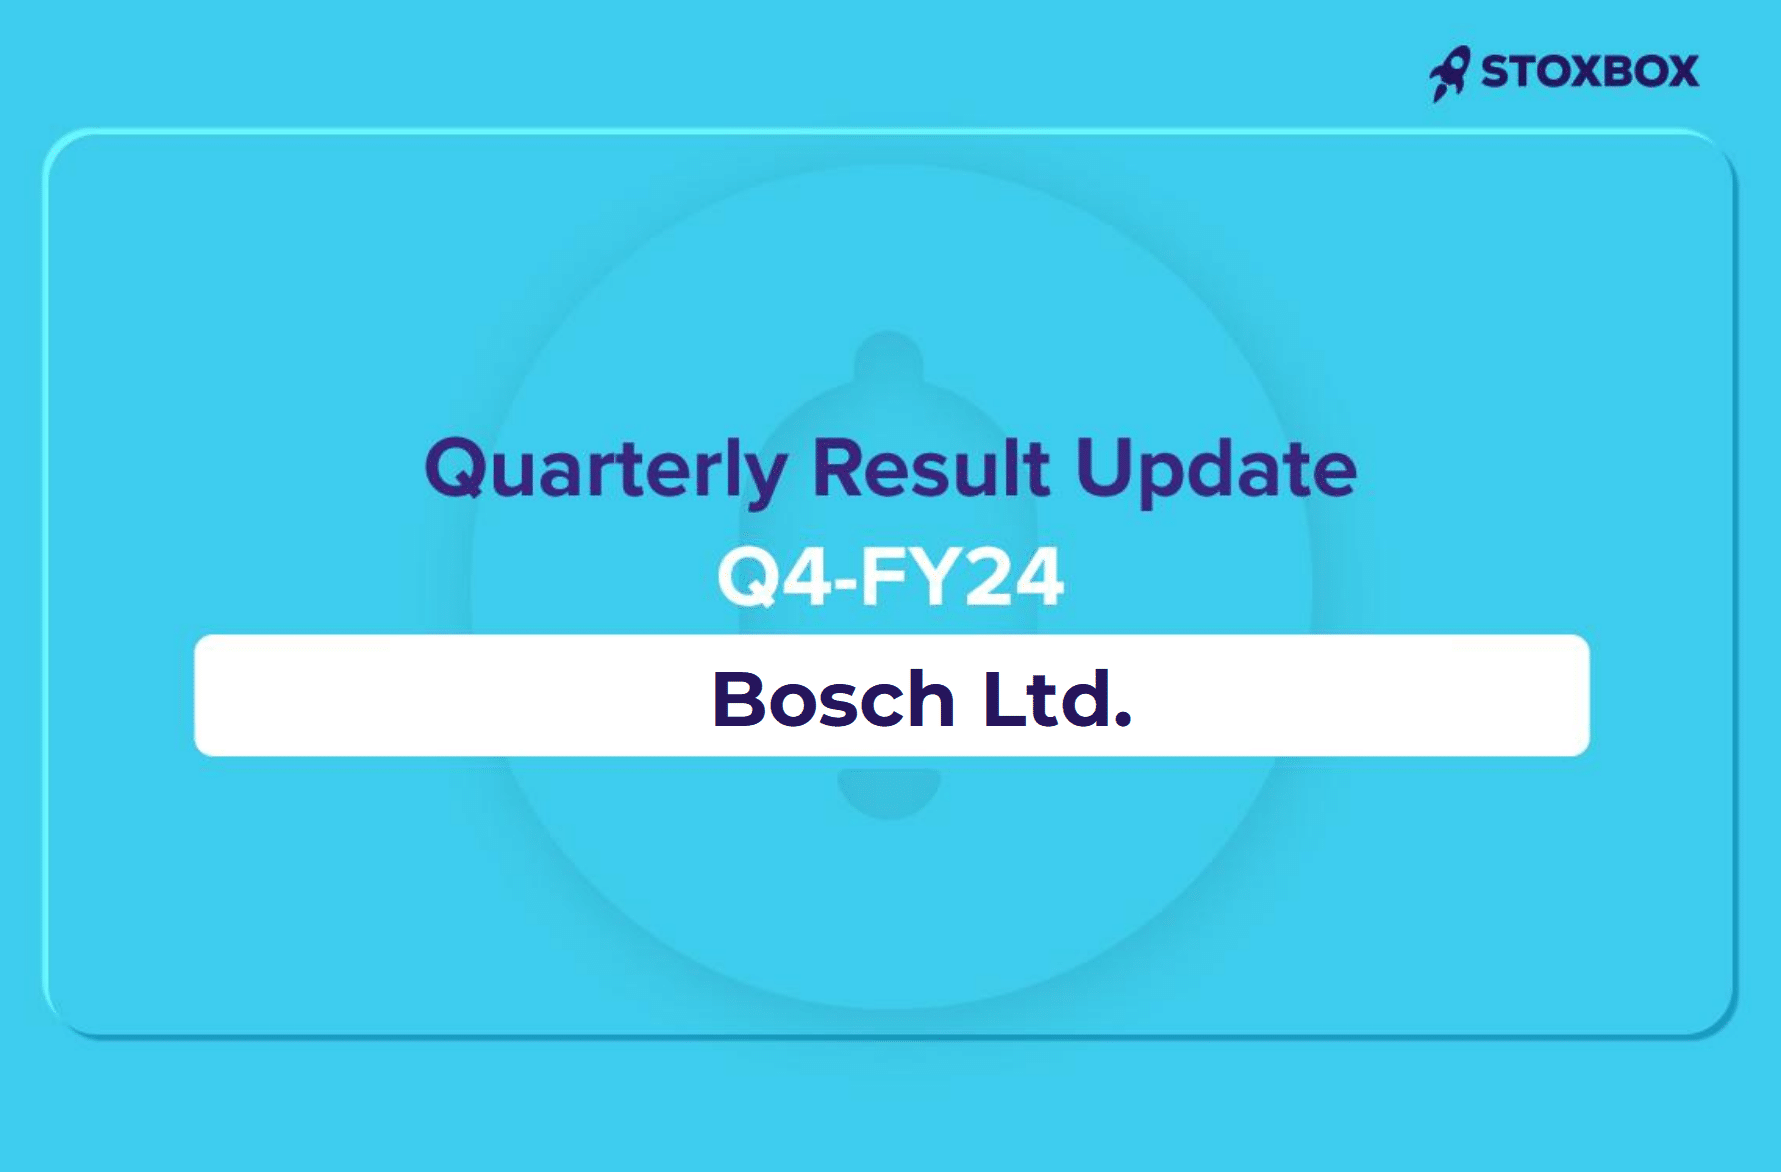 Bosch Ltd. Results Update